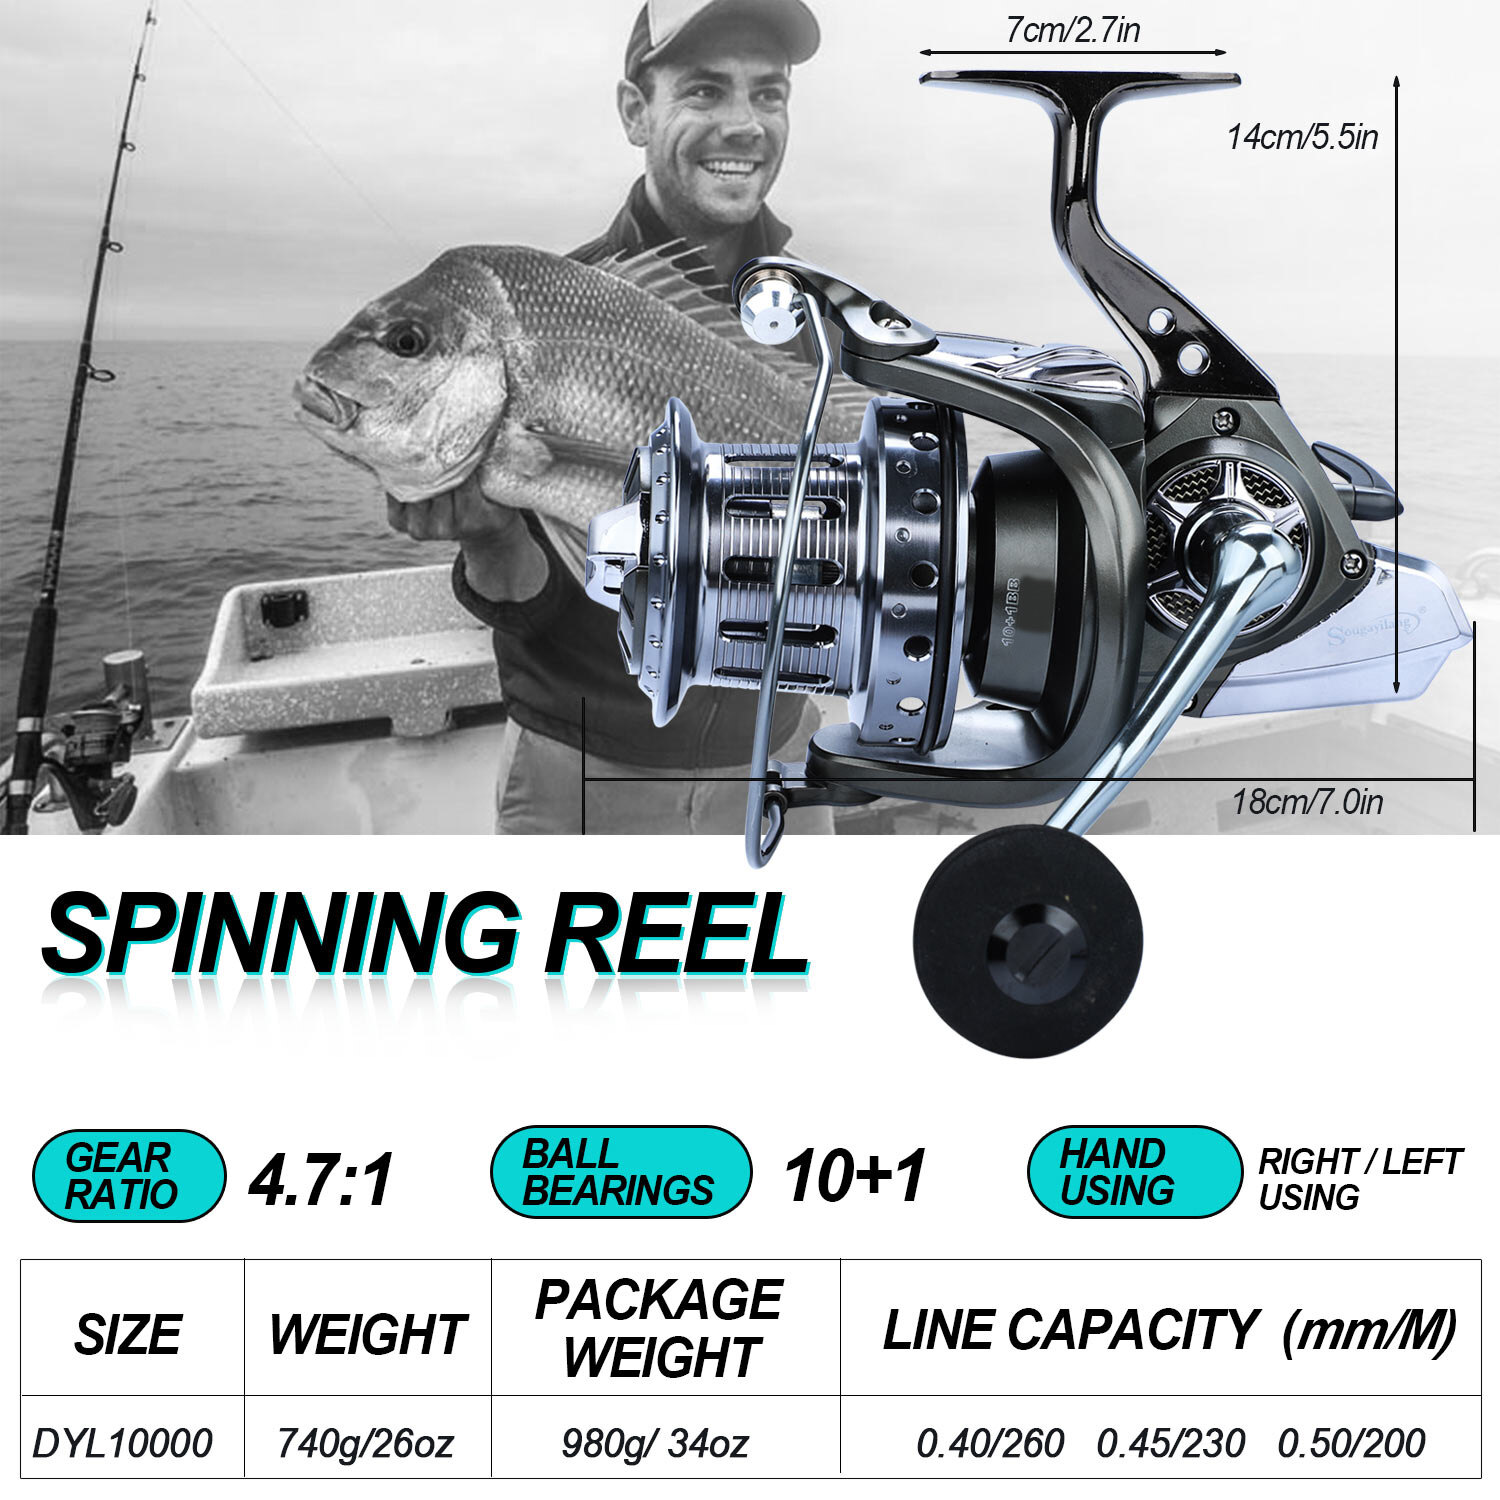 Sougayilang 10000 Series 11+1bb Fishing Reel 4.6:1 Gear - Temu Canada